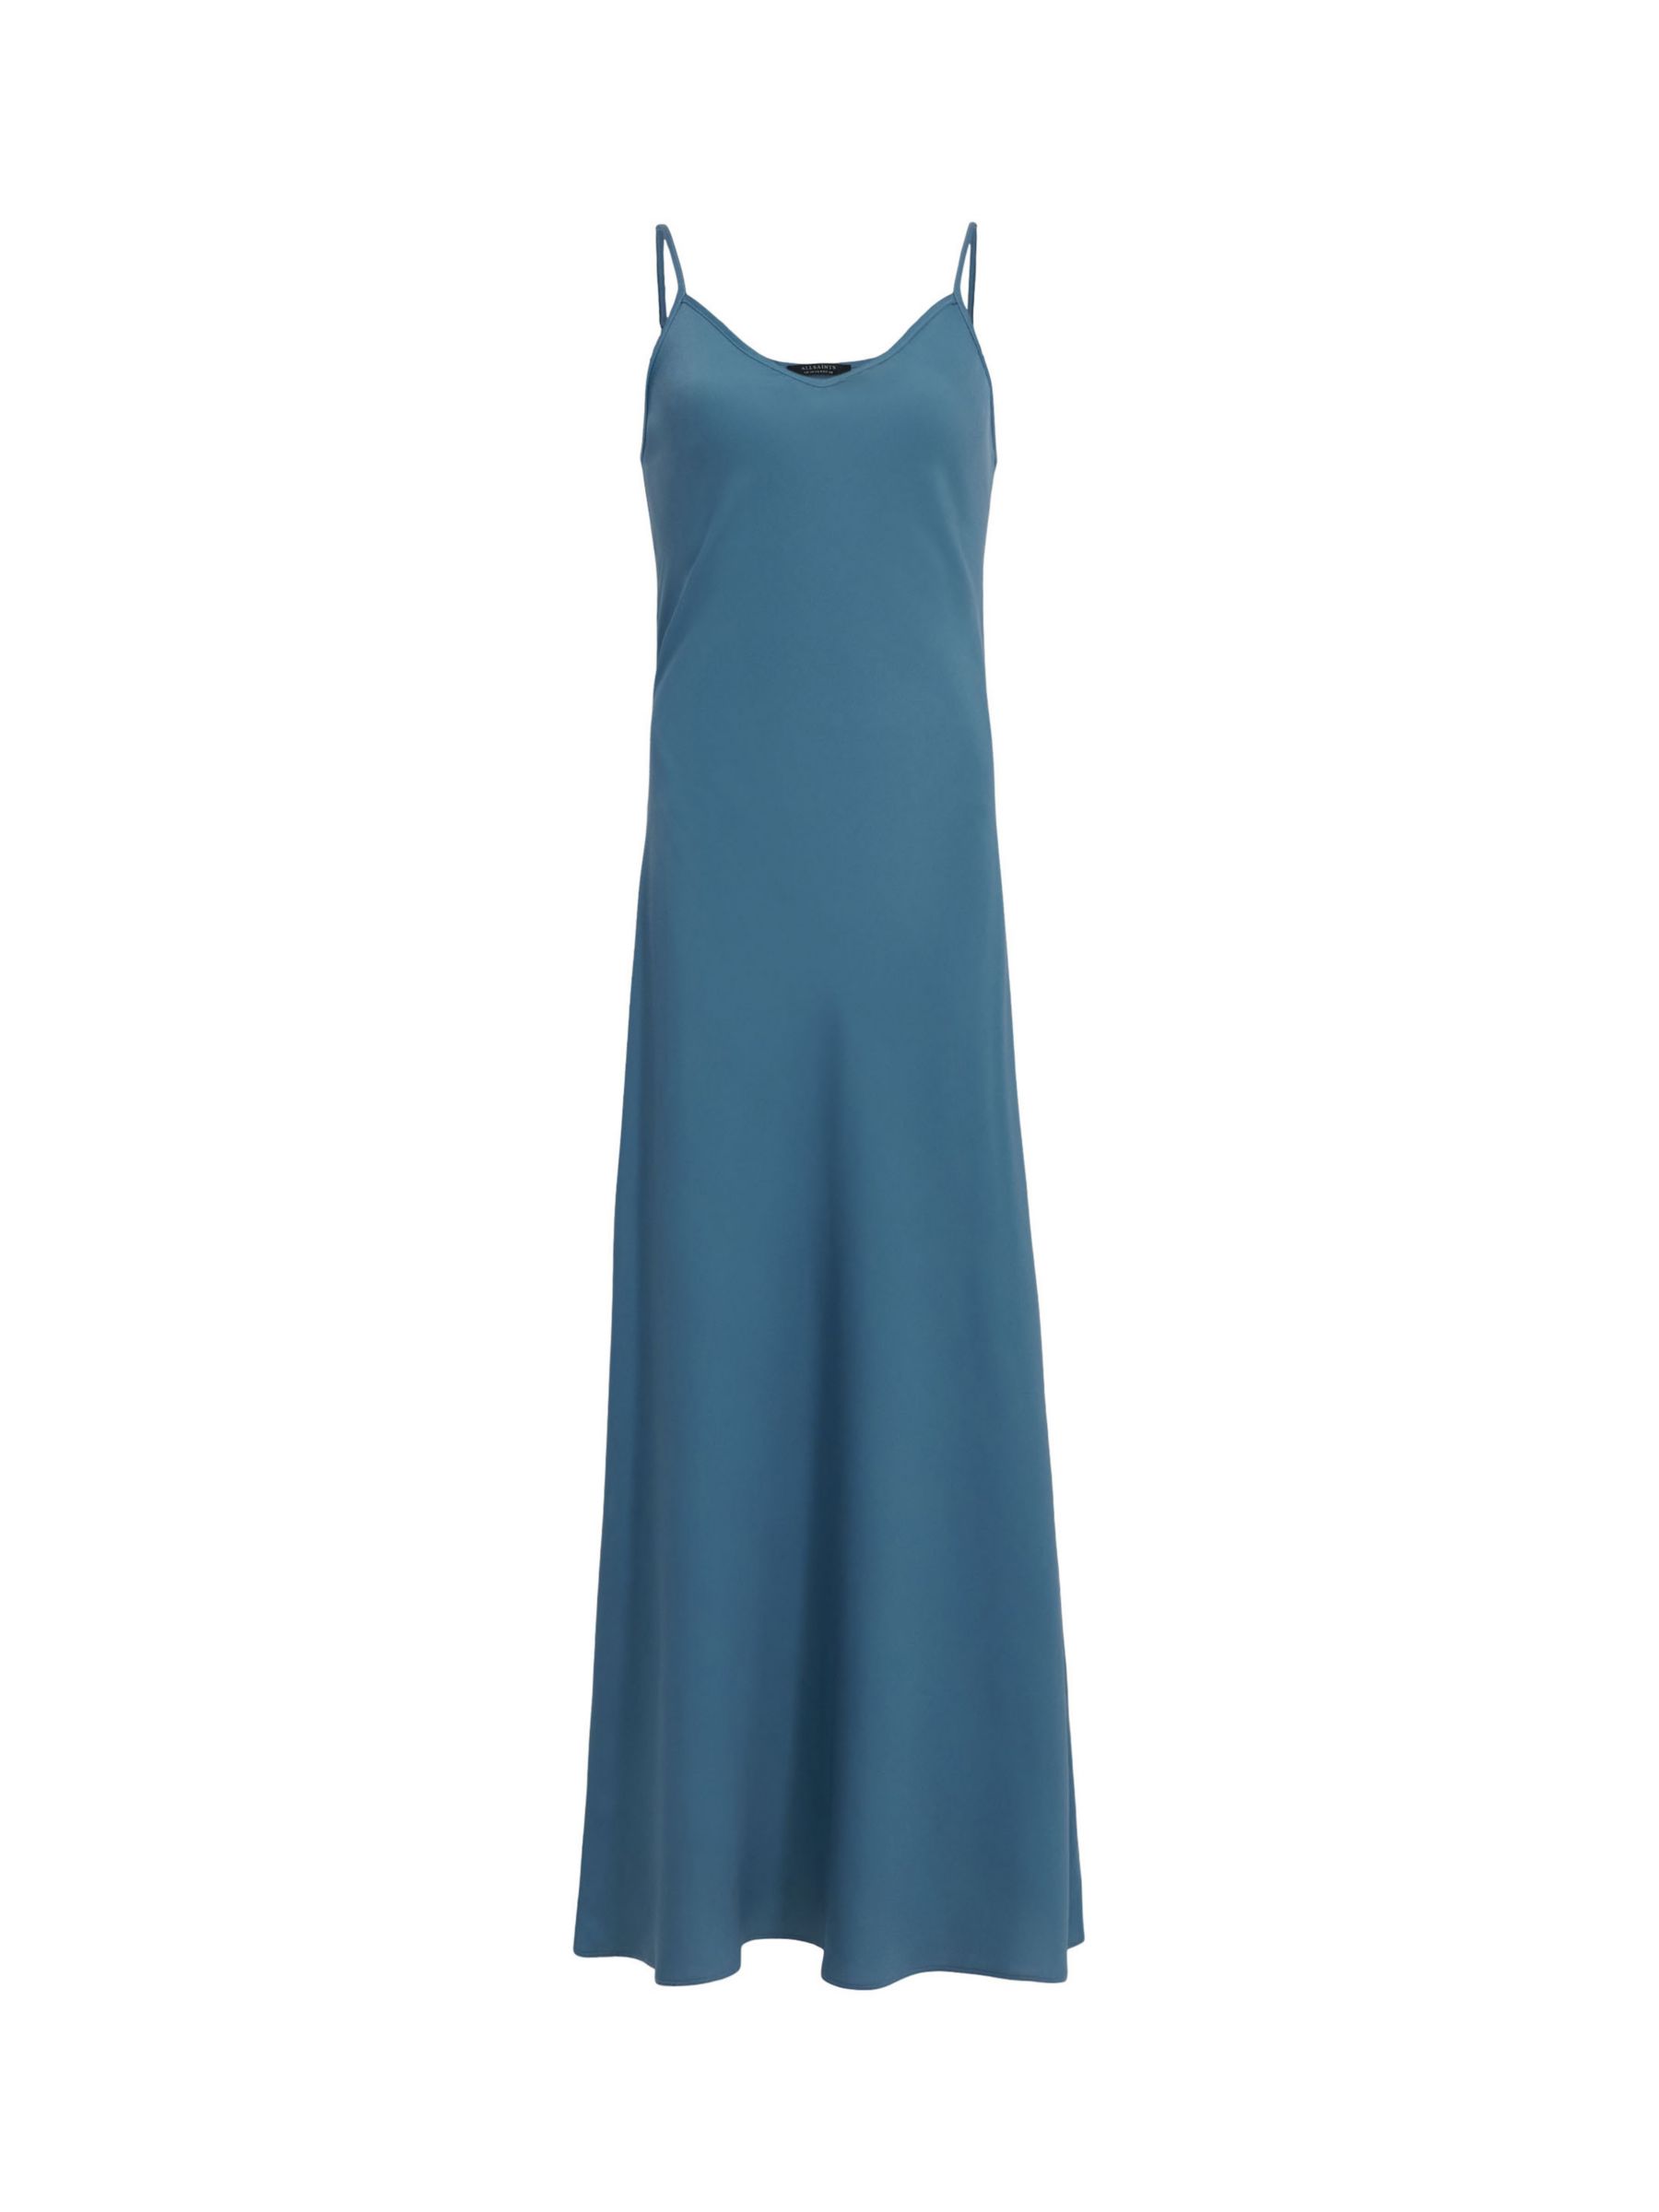 AllSaints Bryony Sleeveless Midi Dress, Petrol Blue at John Lewis ...